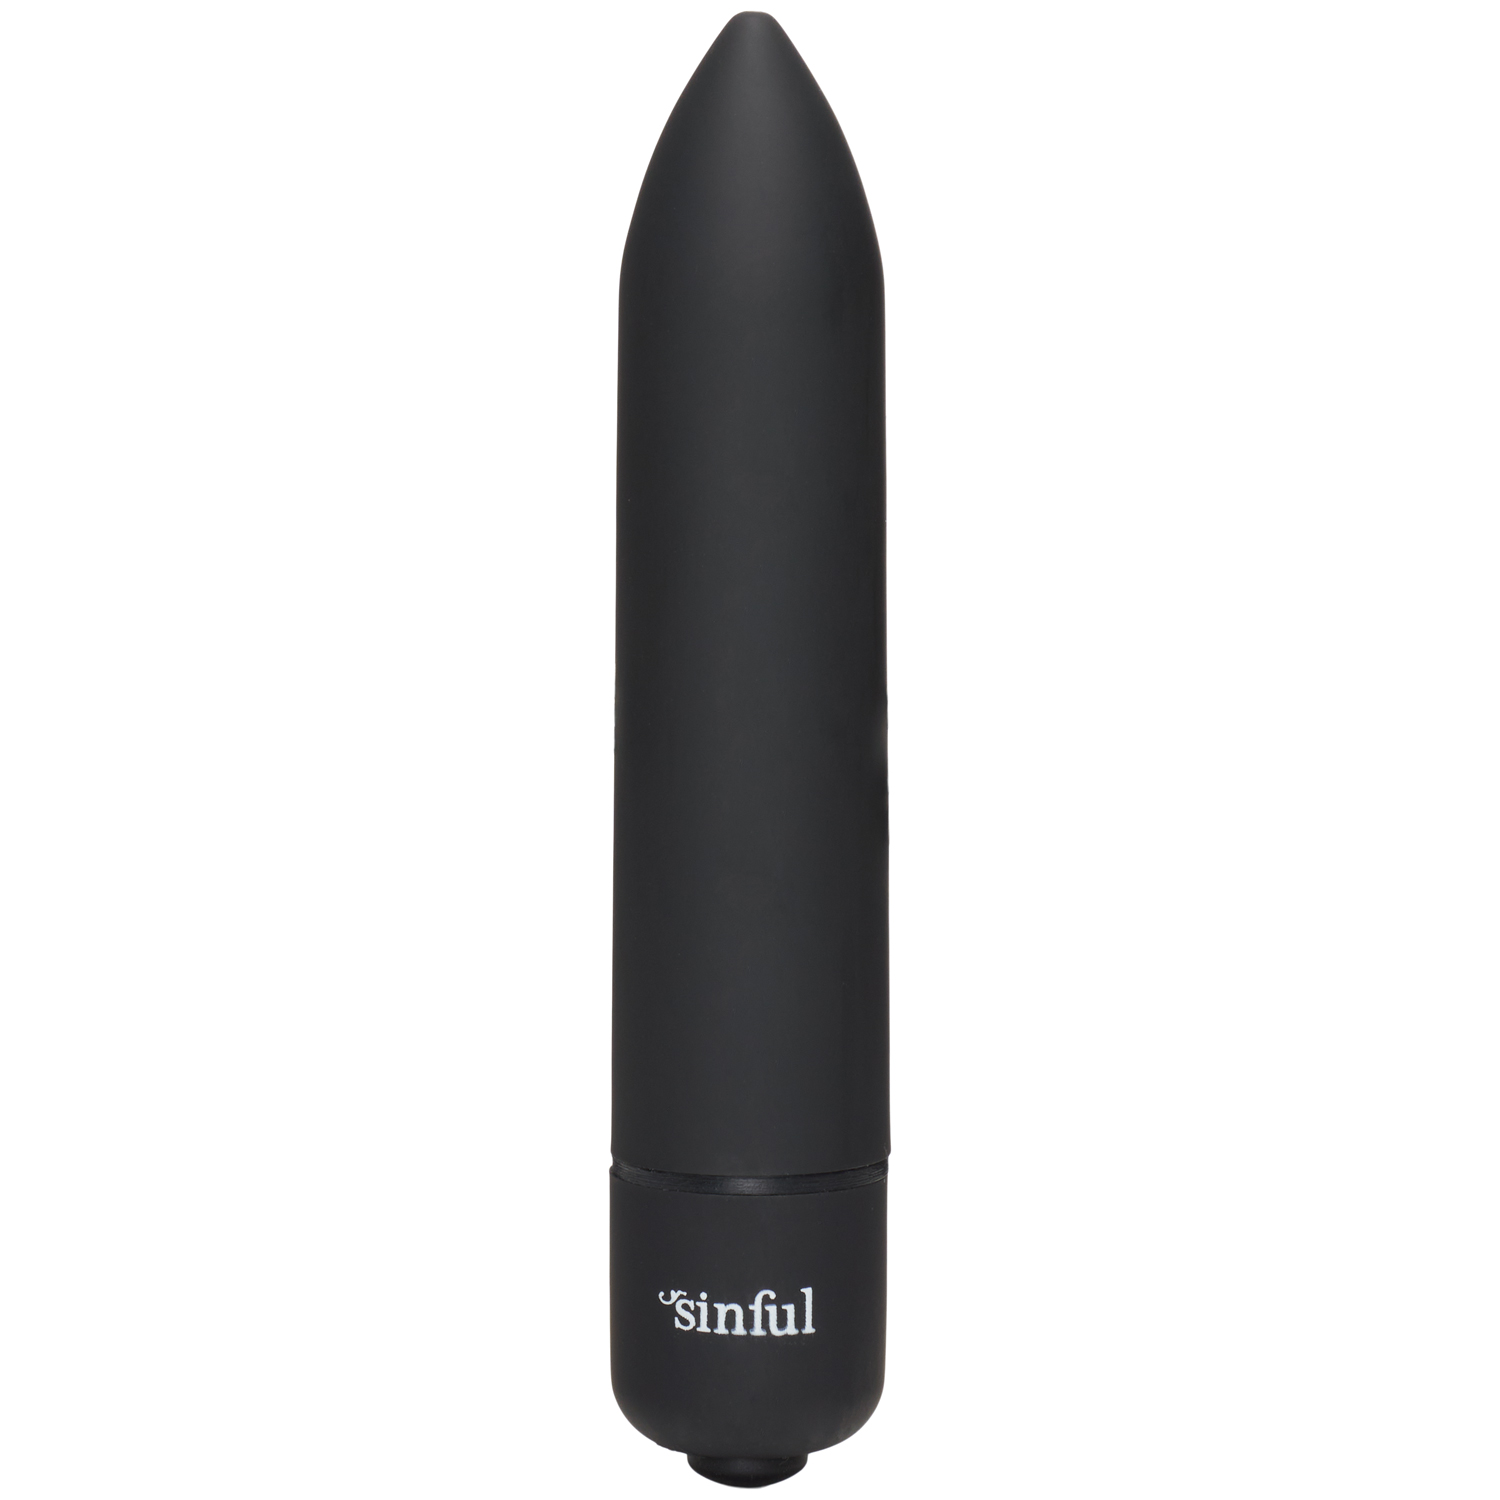 Sinful 10-Speed Bullet Vibrator       - Black